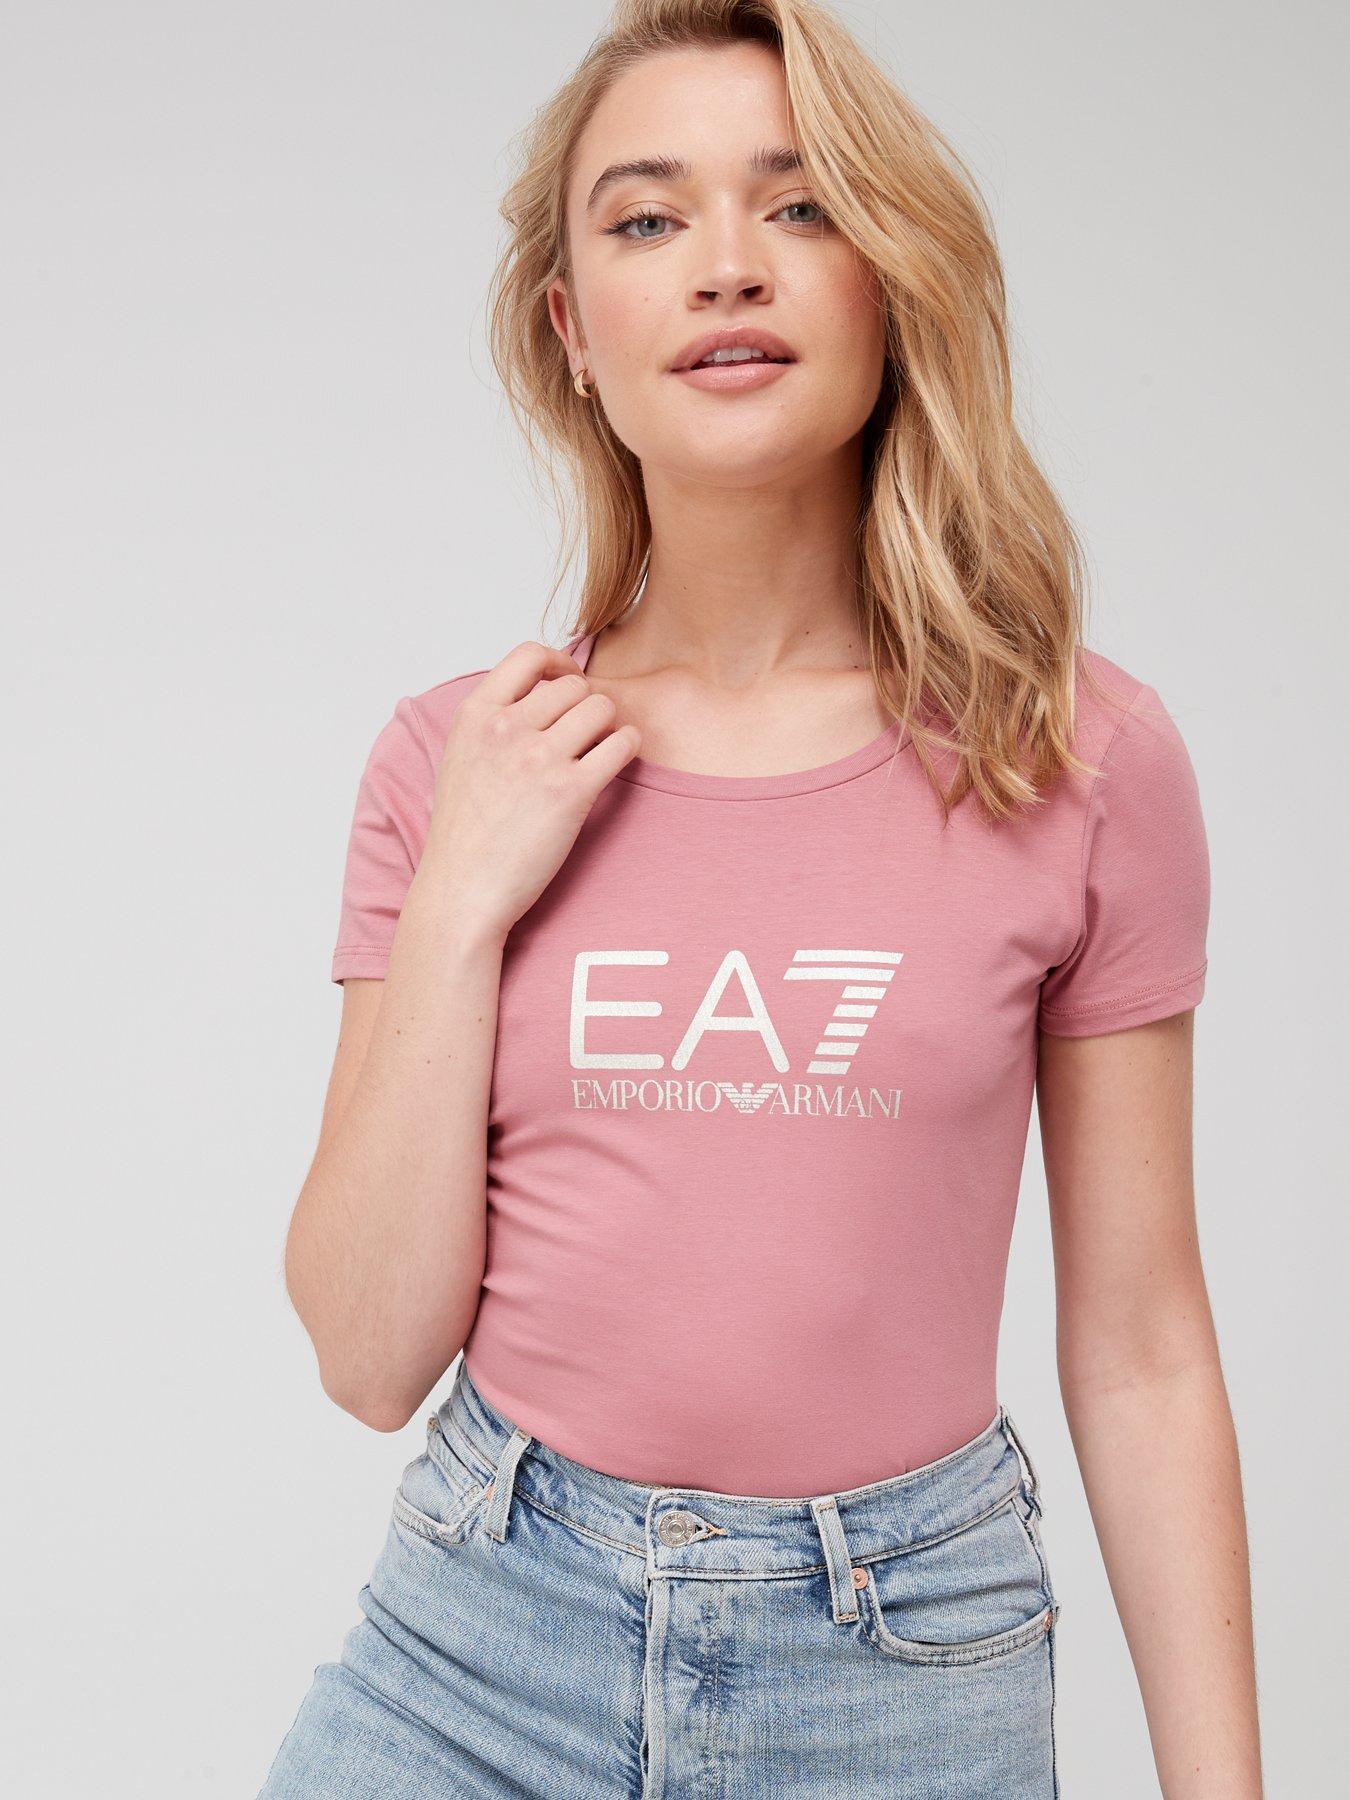 Ea7 emporio armani | Tops & t-shirts | Women 